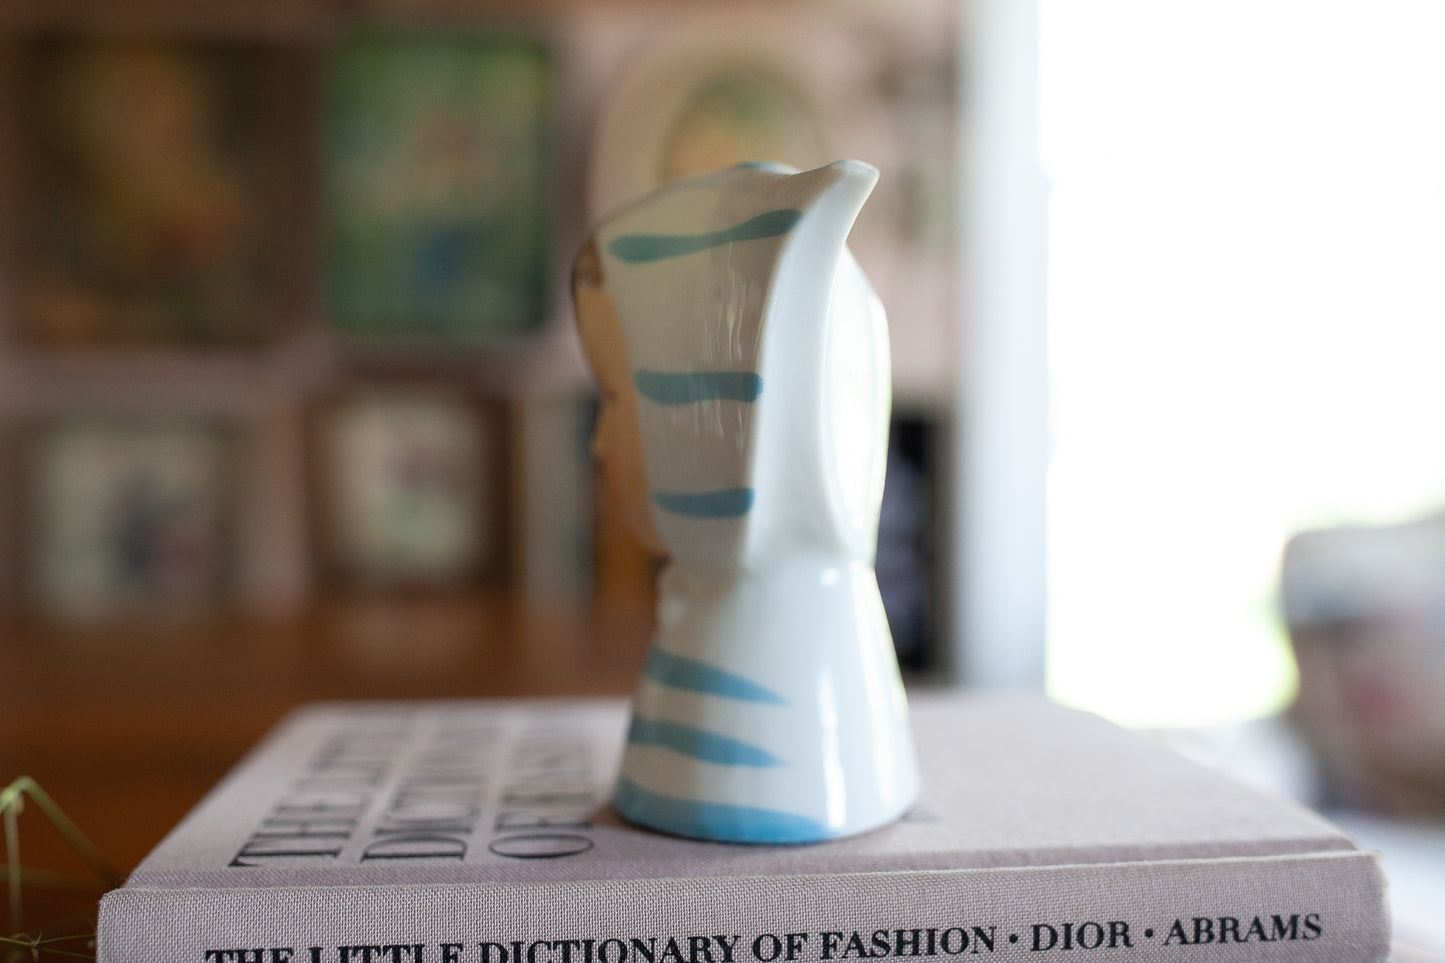 Vintage Lady Head Vase - Mini Head Vase- Made in Japan -Blue and White